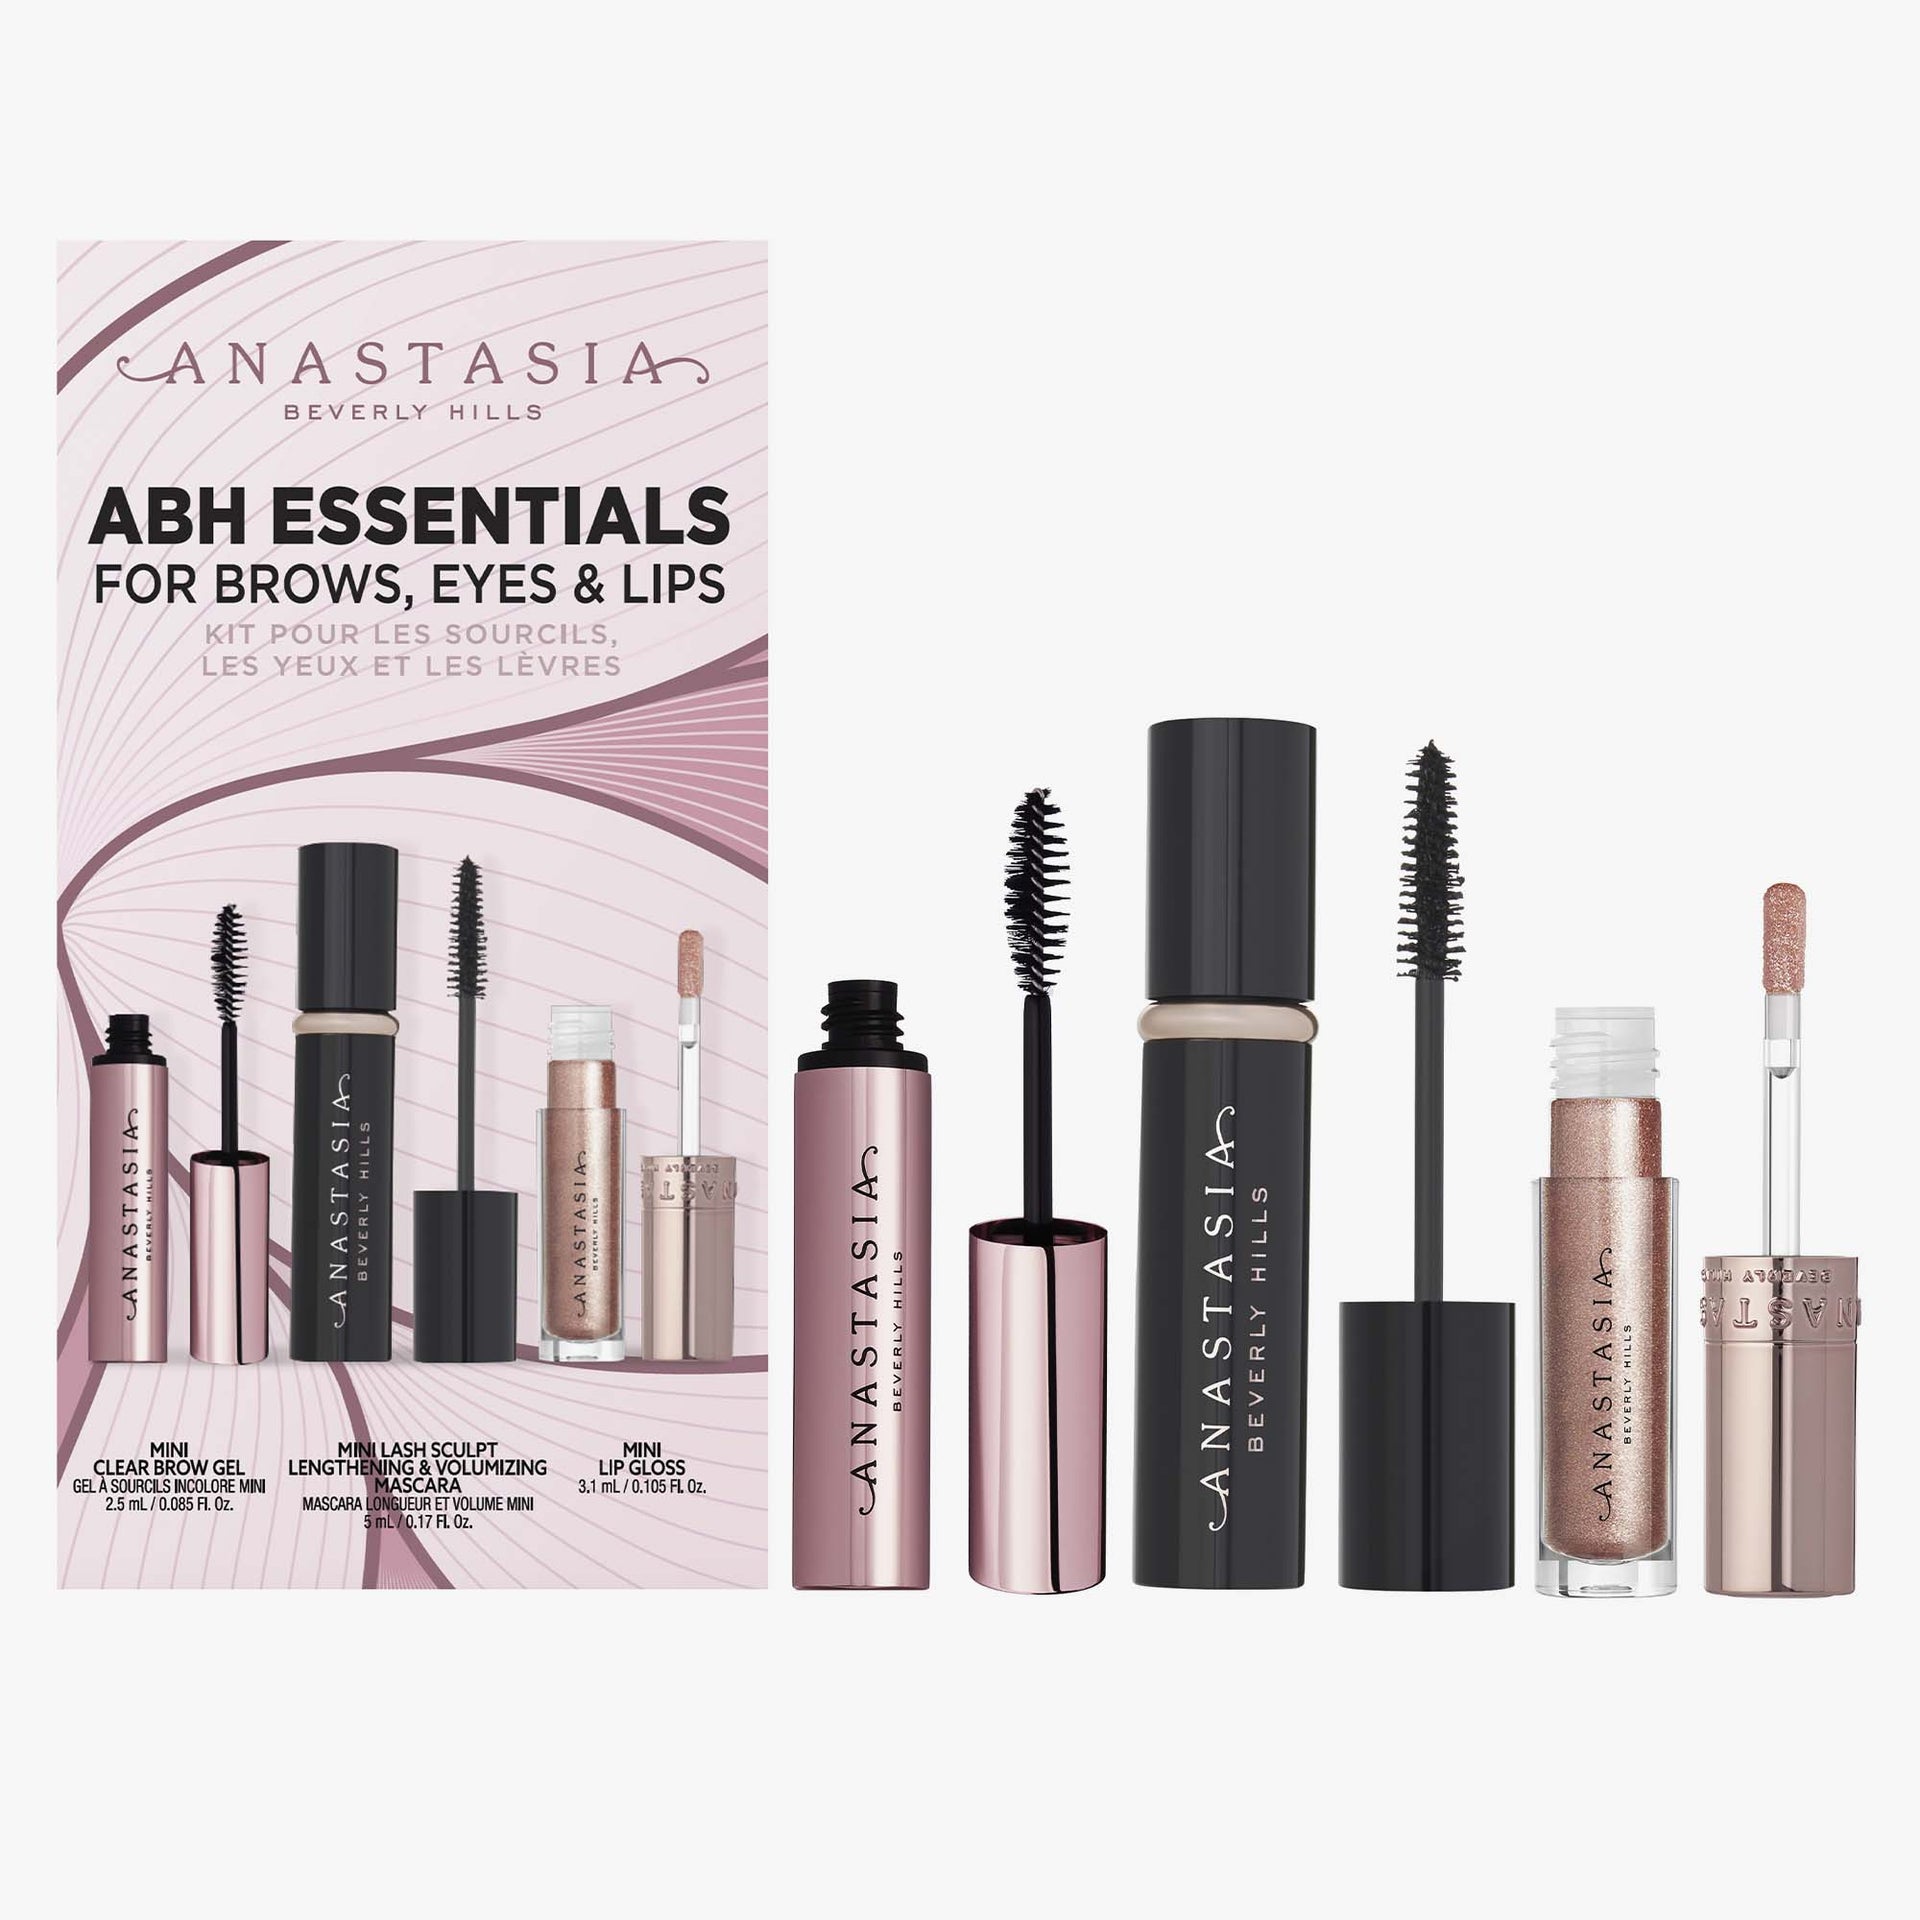 ABH Essentials Kit Product Image